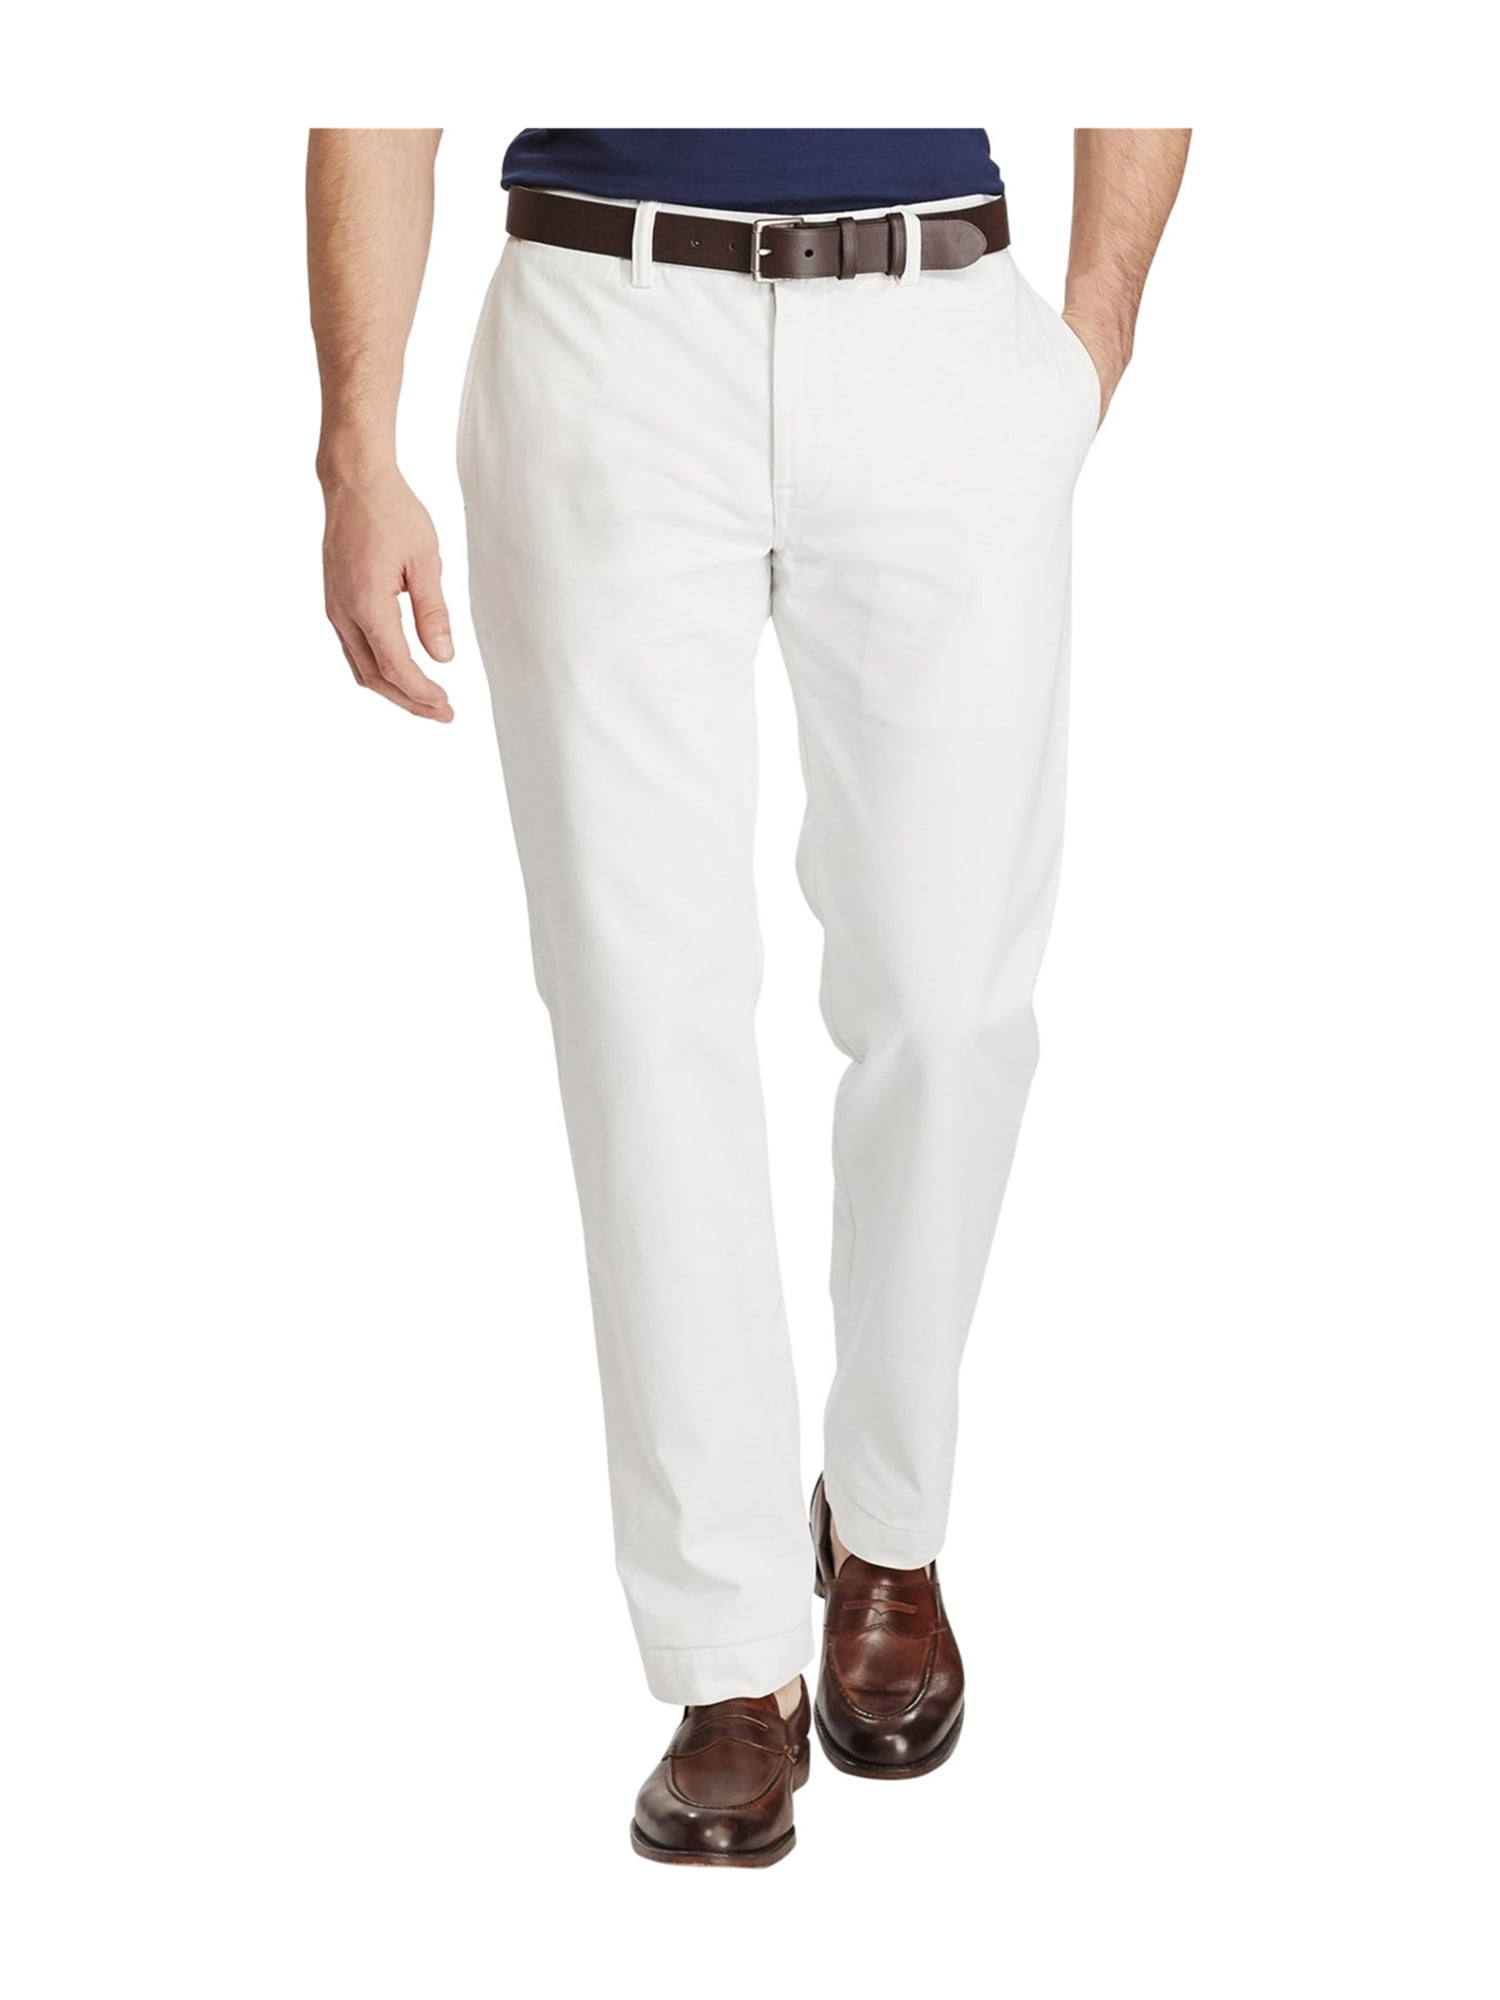 Ralph Lauren Mens Classic Suffield Casual Chino Pants white-2 30x30 ...